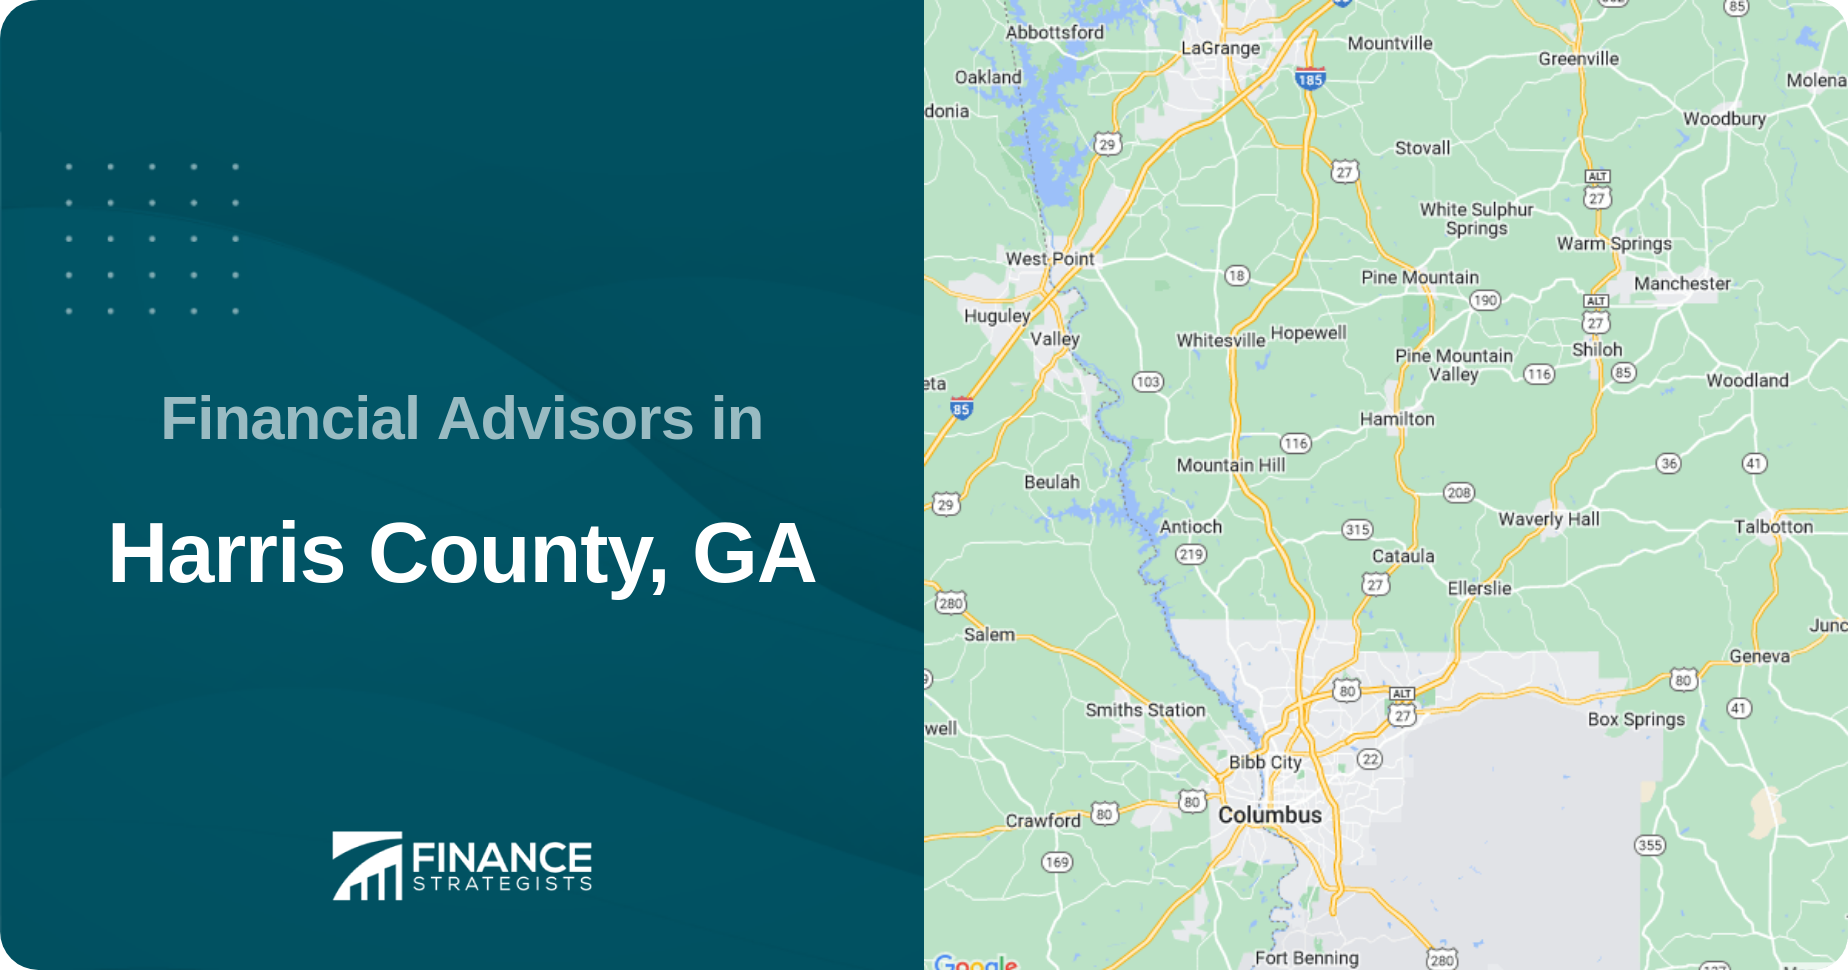 Financial Advisors in Harris County, GA